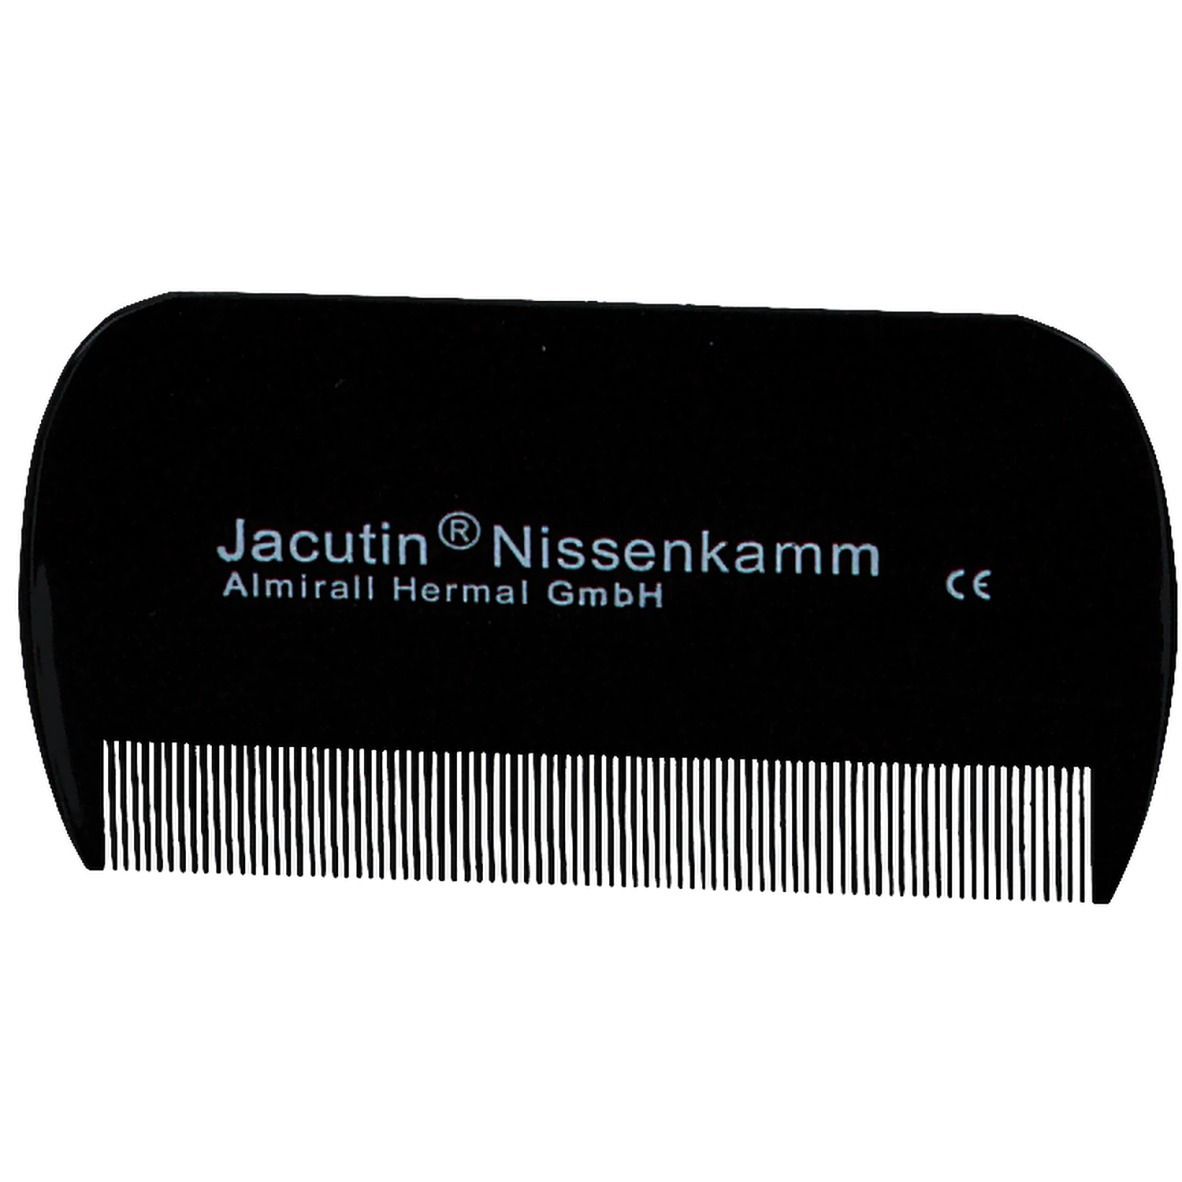 Jacutin® Nissenkamm